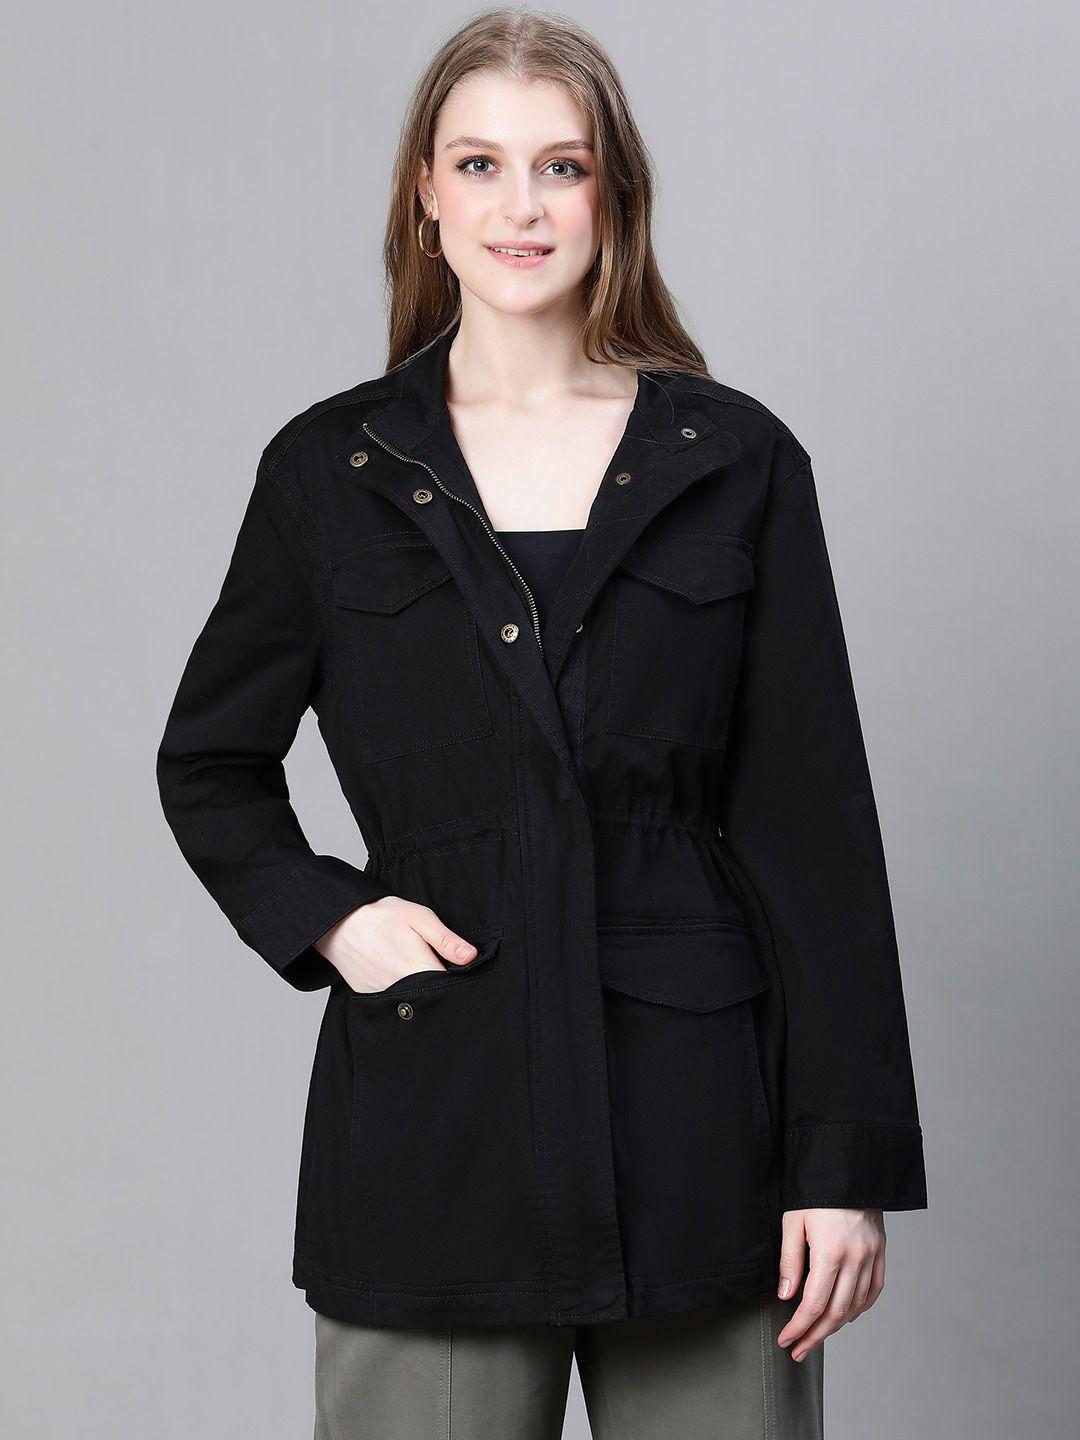 oxolloxo lightweight mock collar cotton longline tailored jacket